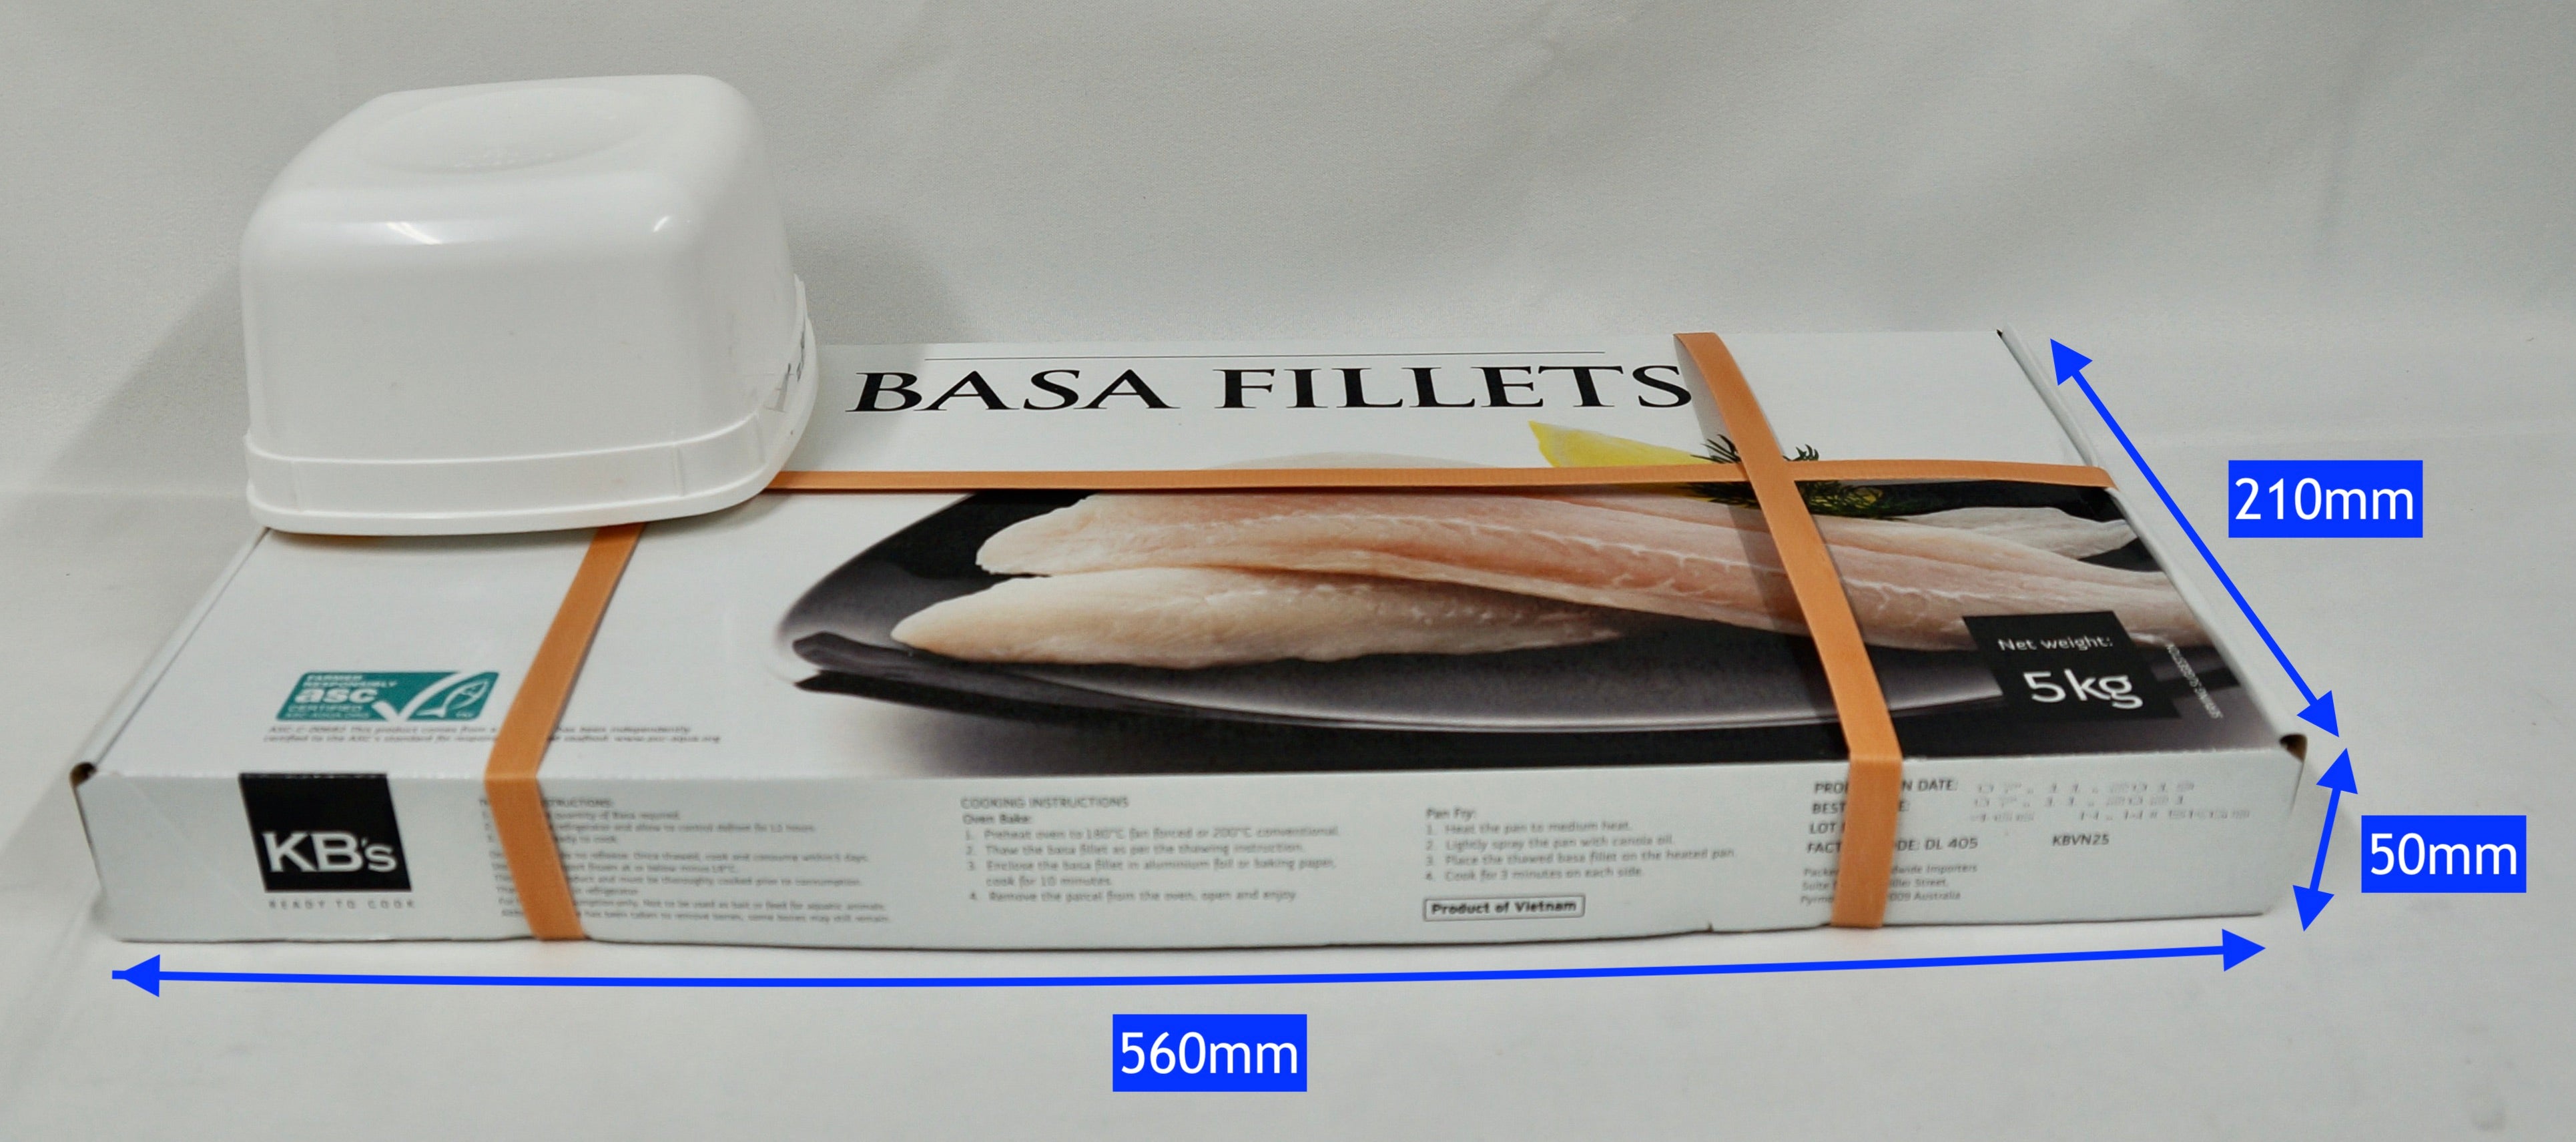 Basa Fillets Skinless 5kg Ctn